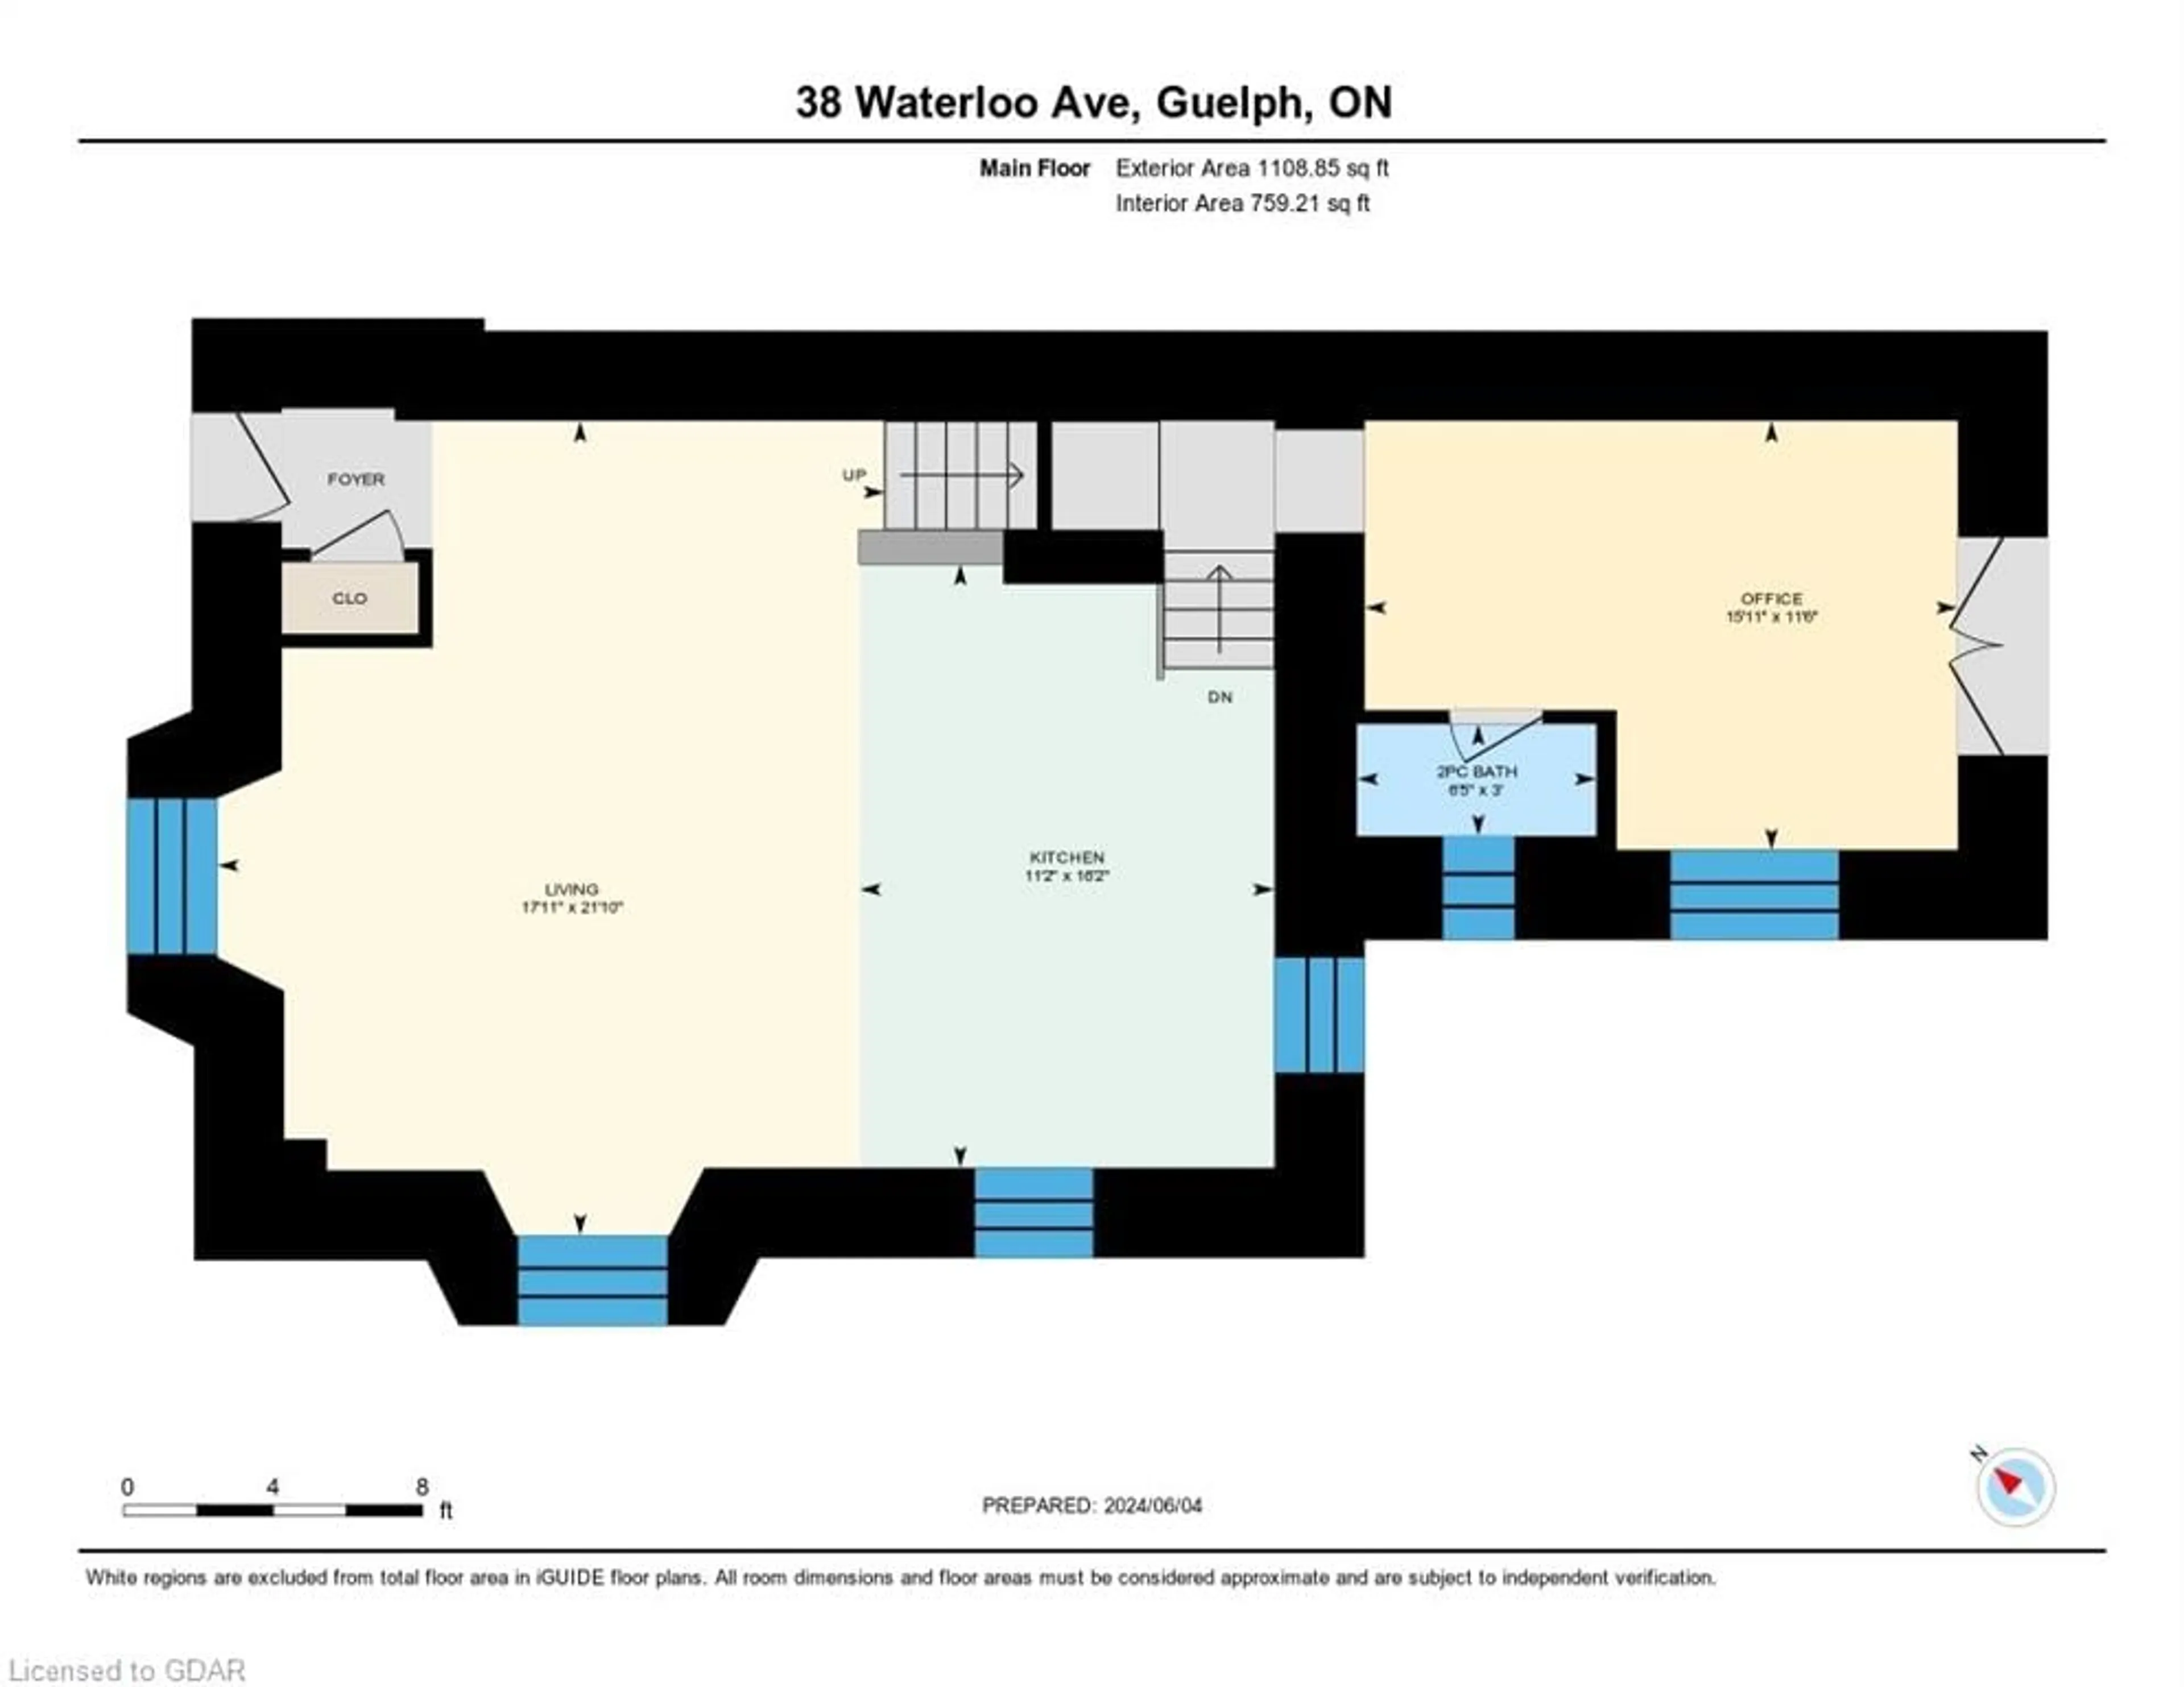 Floor plan for 38 Waterloo Ave, Guelph Ontario N1H 3H5